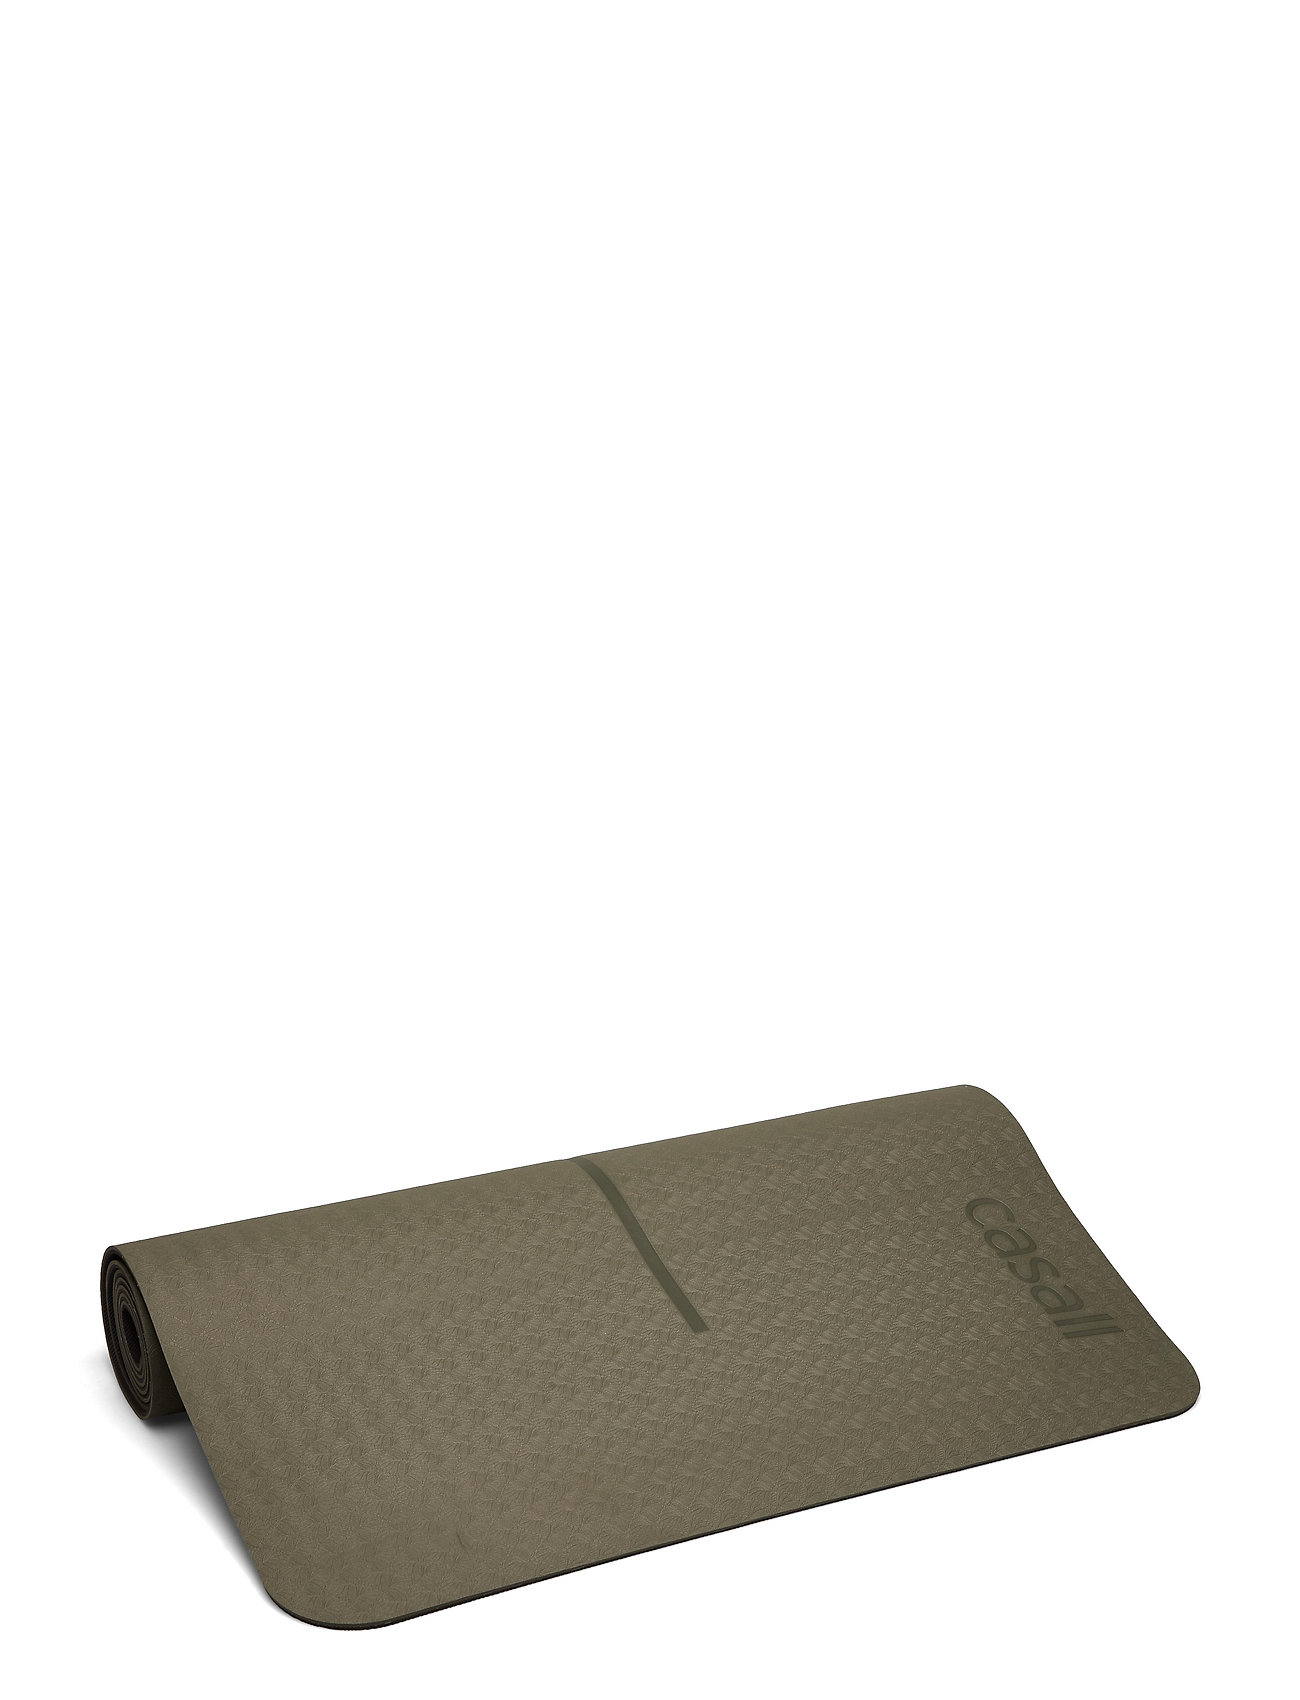 Yoga mat position 4mm - Mahagony Red/Beige